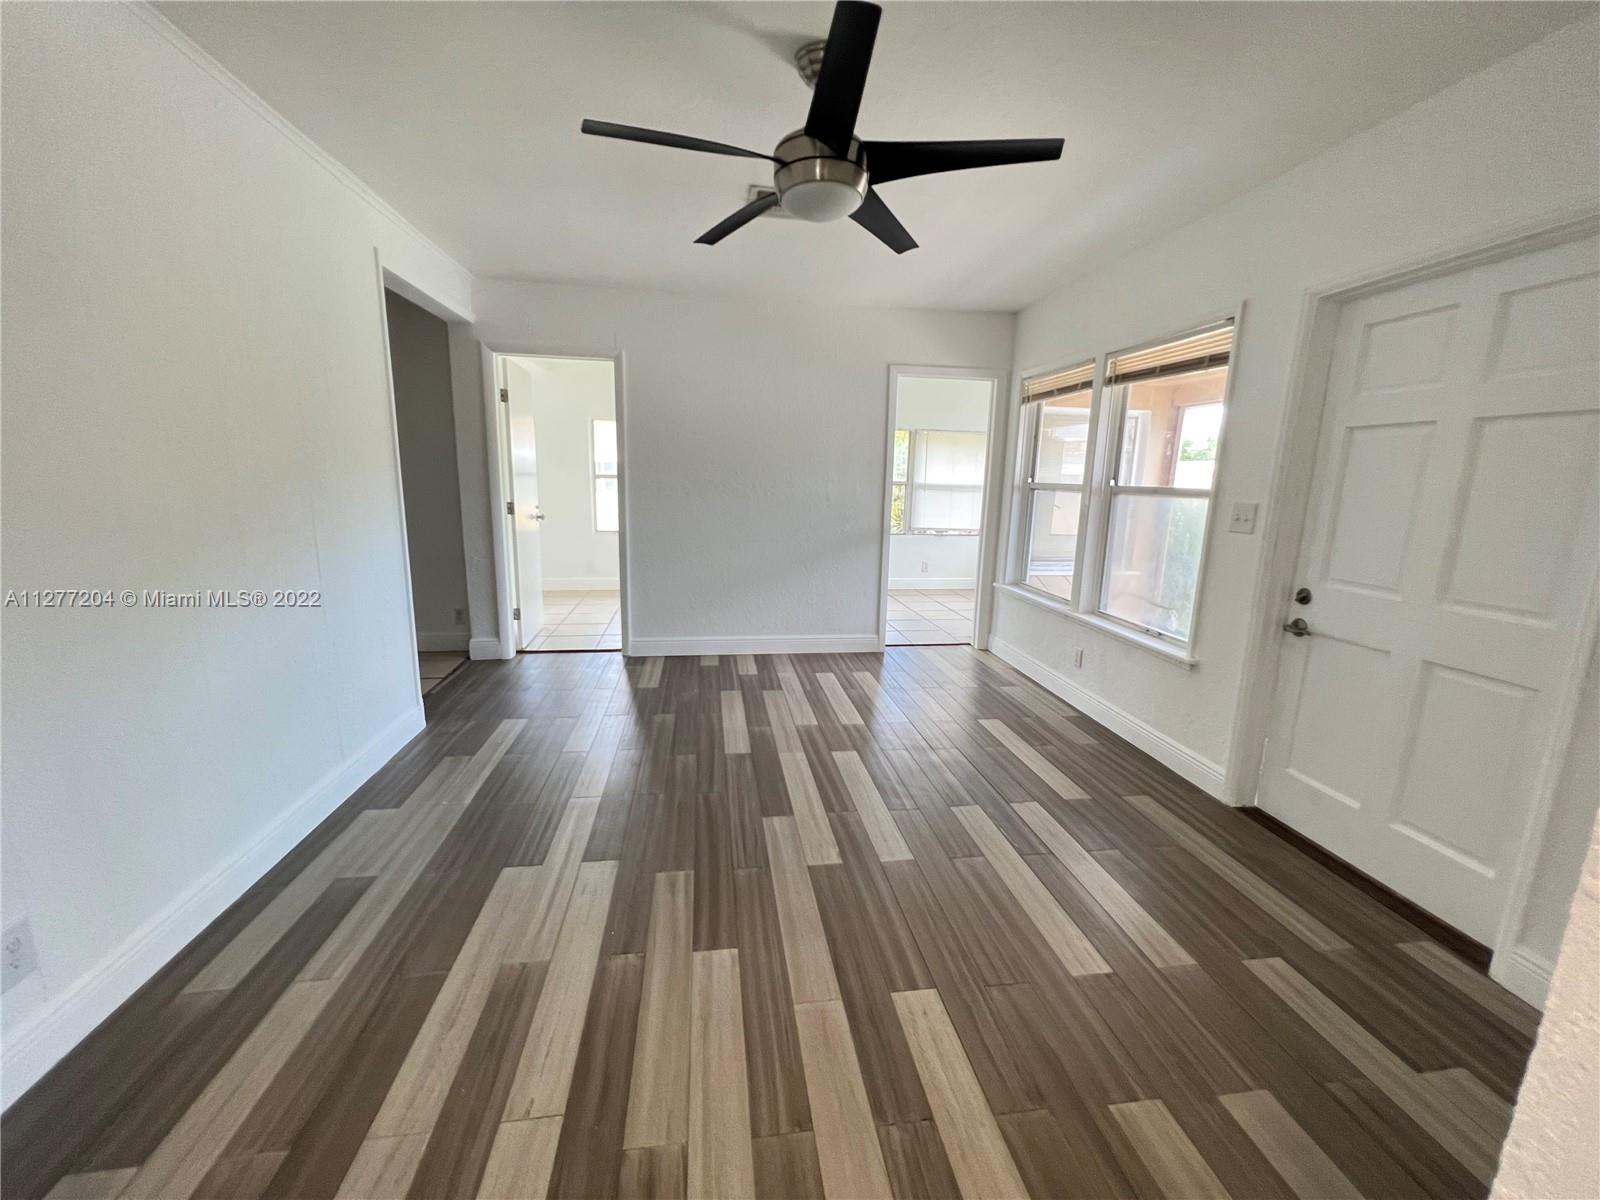 a view of wooden floor in an empty room